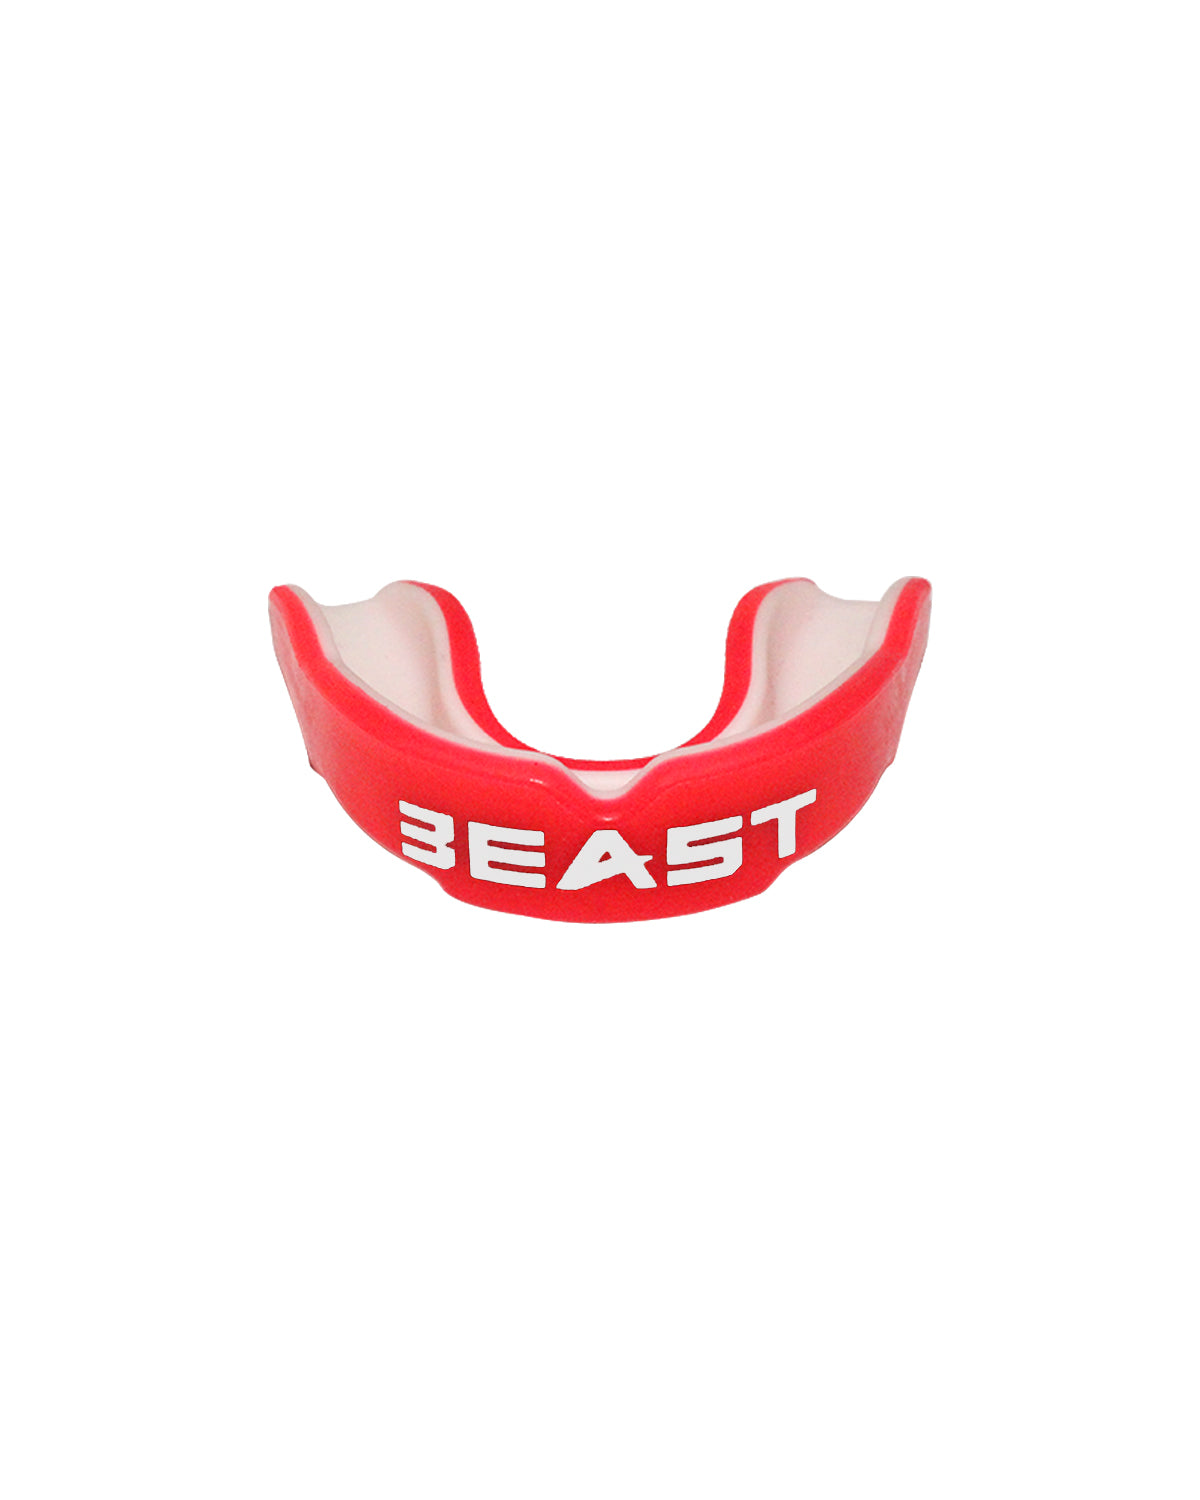 Invincible Beast & Fangs Print Mouth Guard